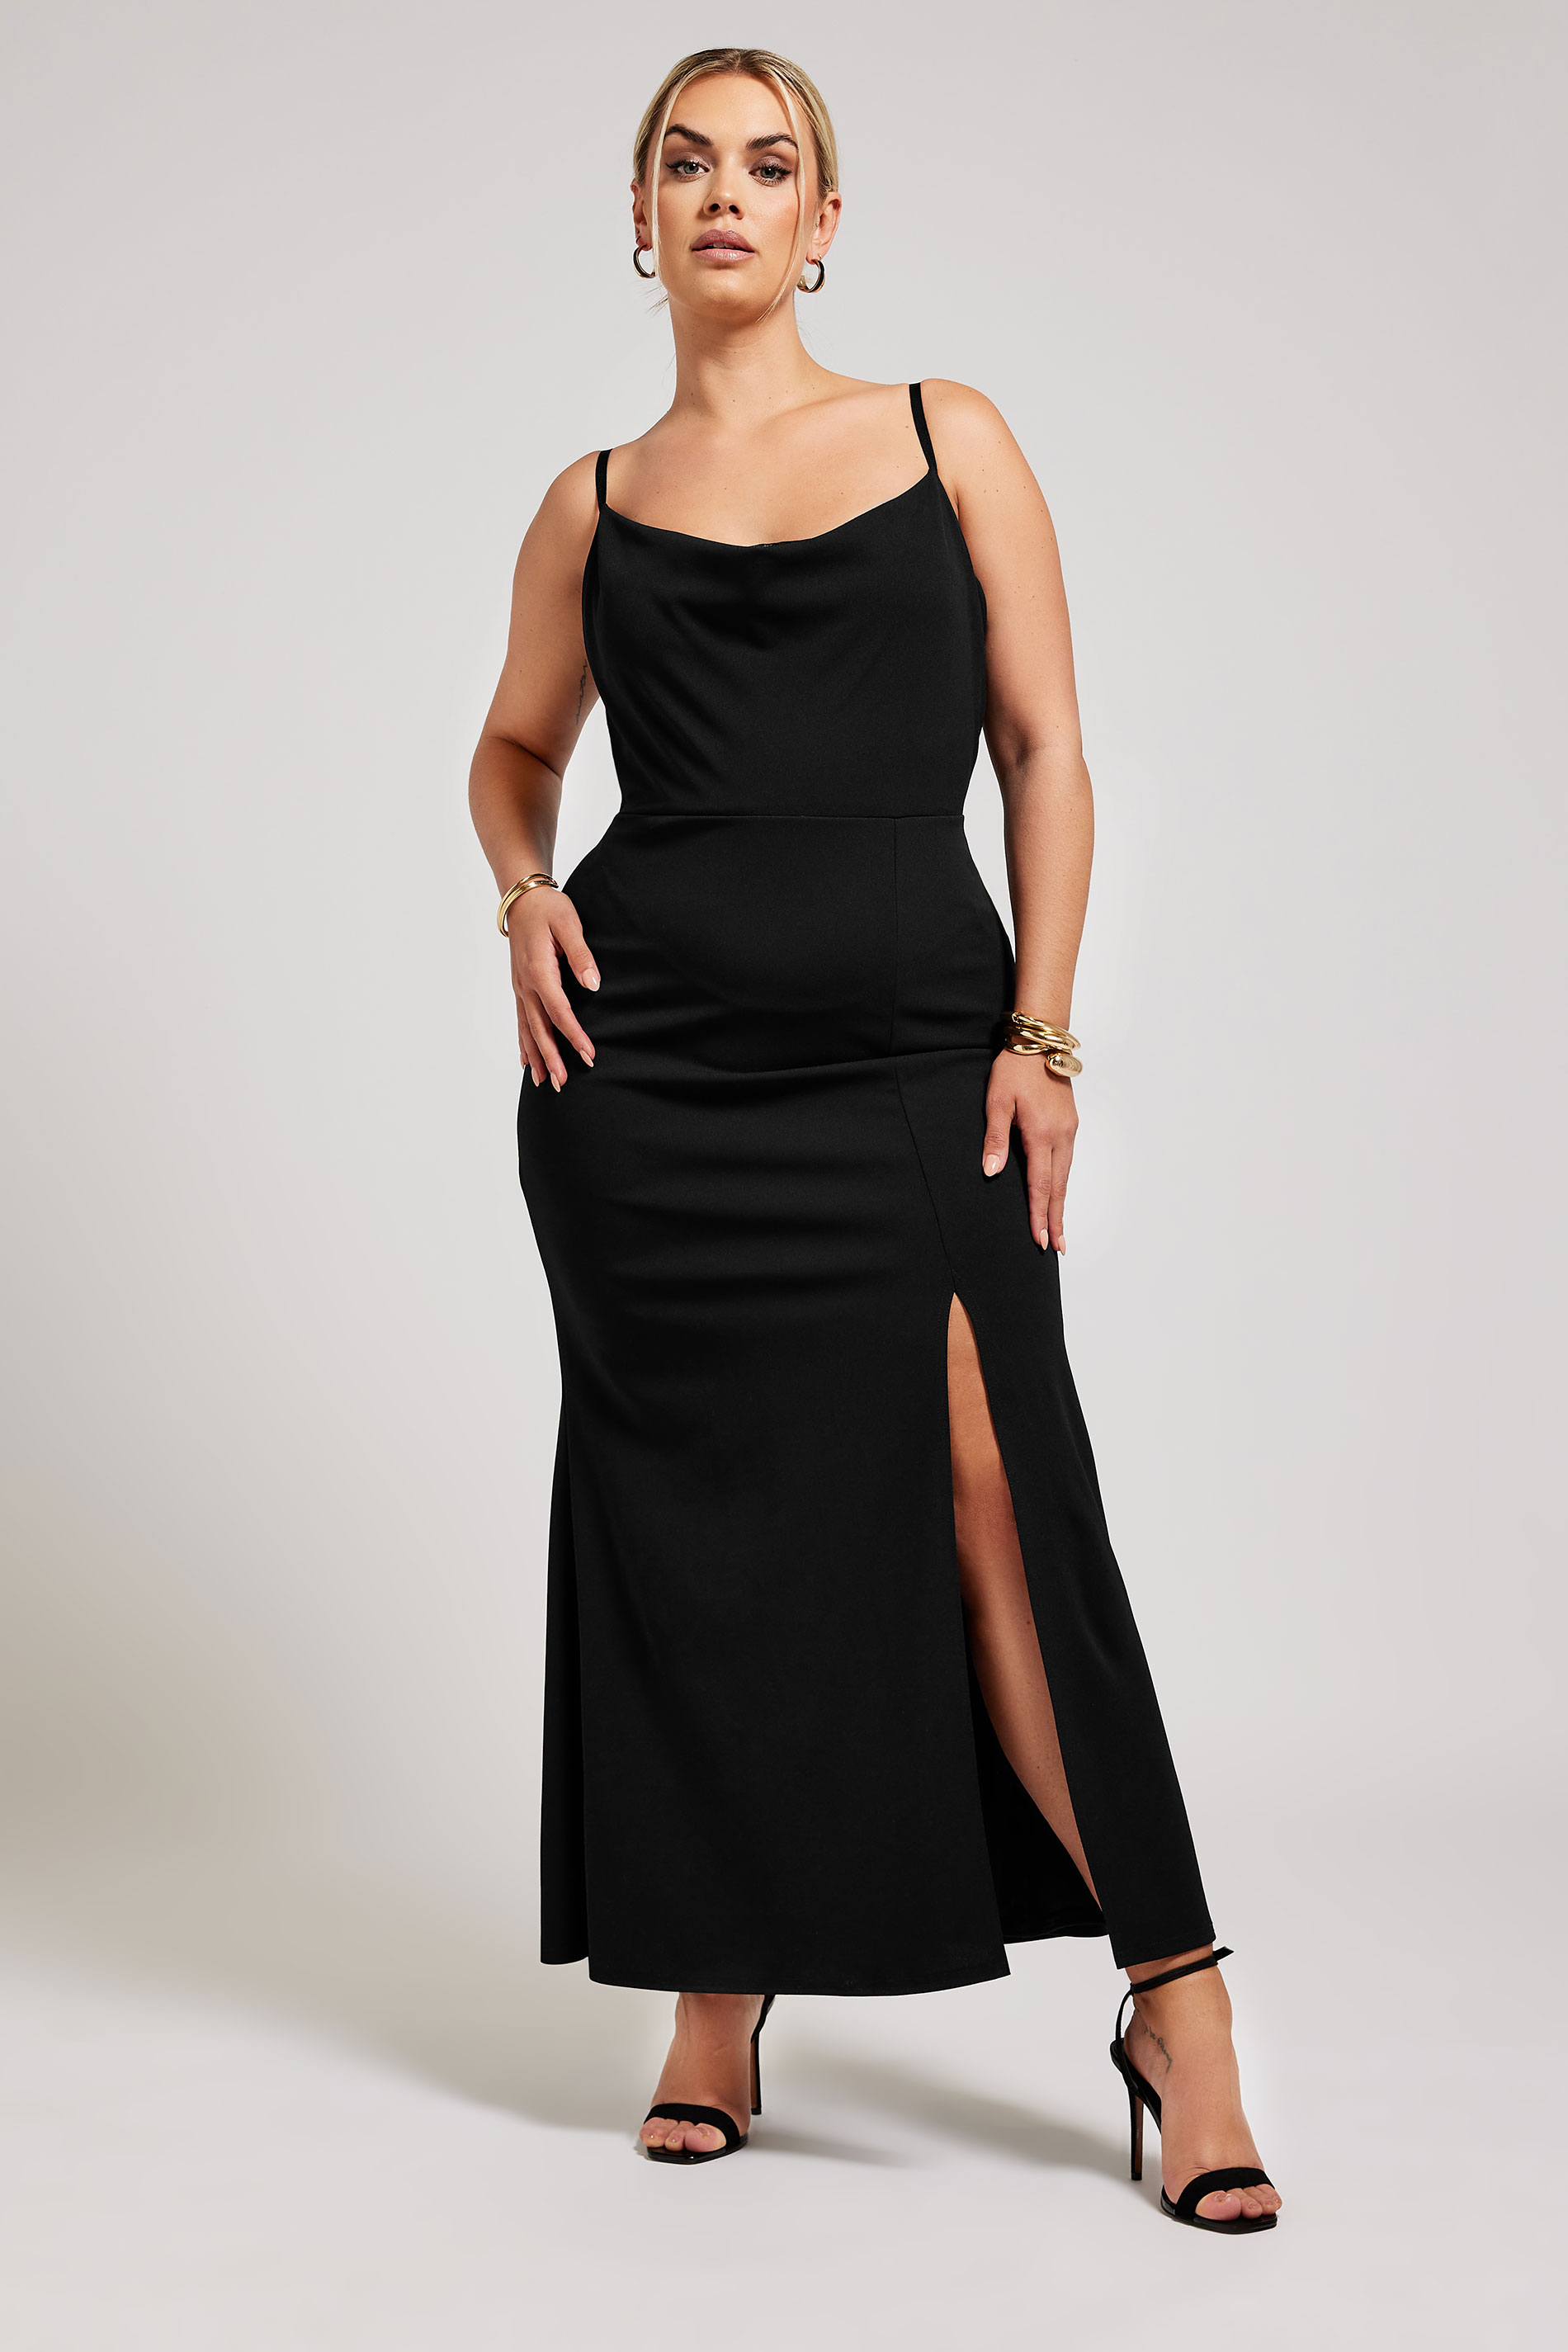 YOURS LONDON Plus Size Black Lace Cowl Neck Maxi Dress | Yours Clothing 1